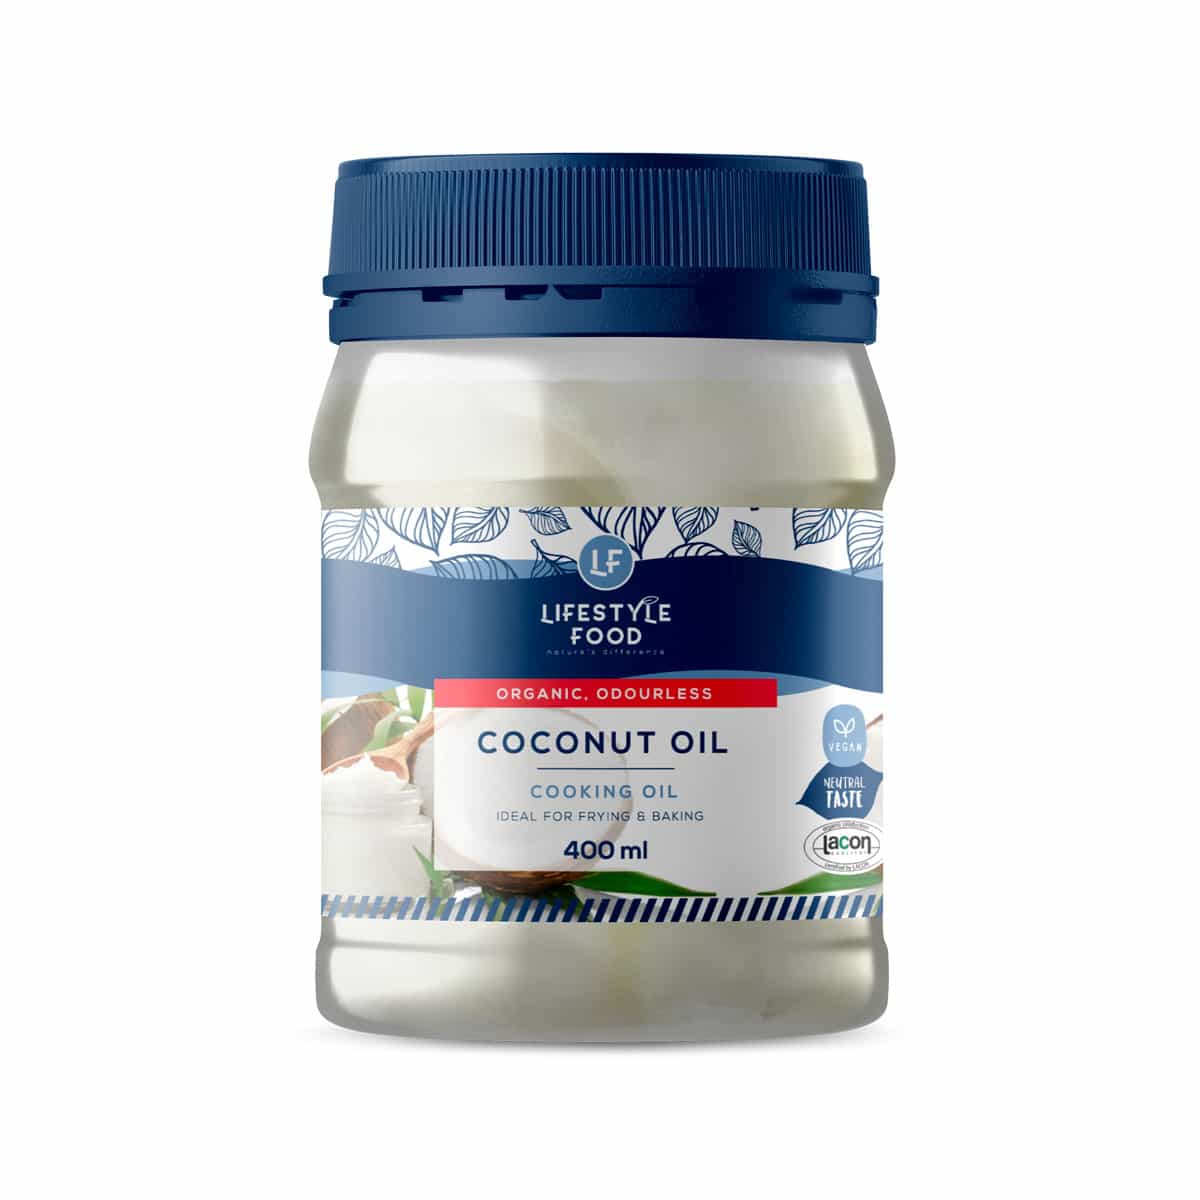 Lifestyle Food Organic Odourless Coconut Oil - 400ml